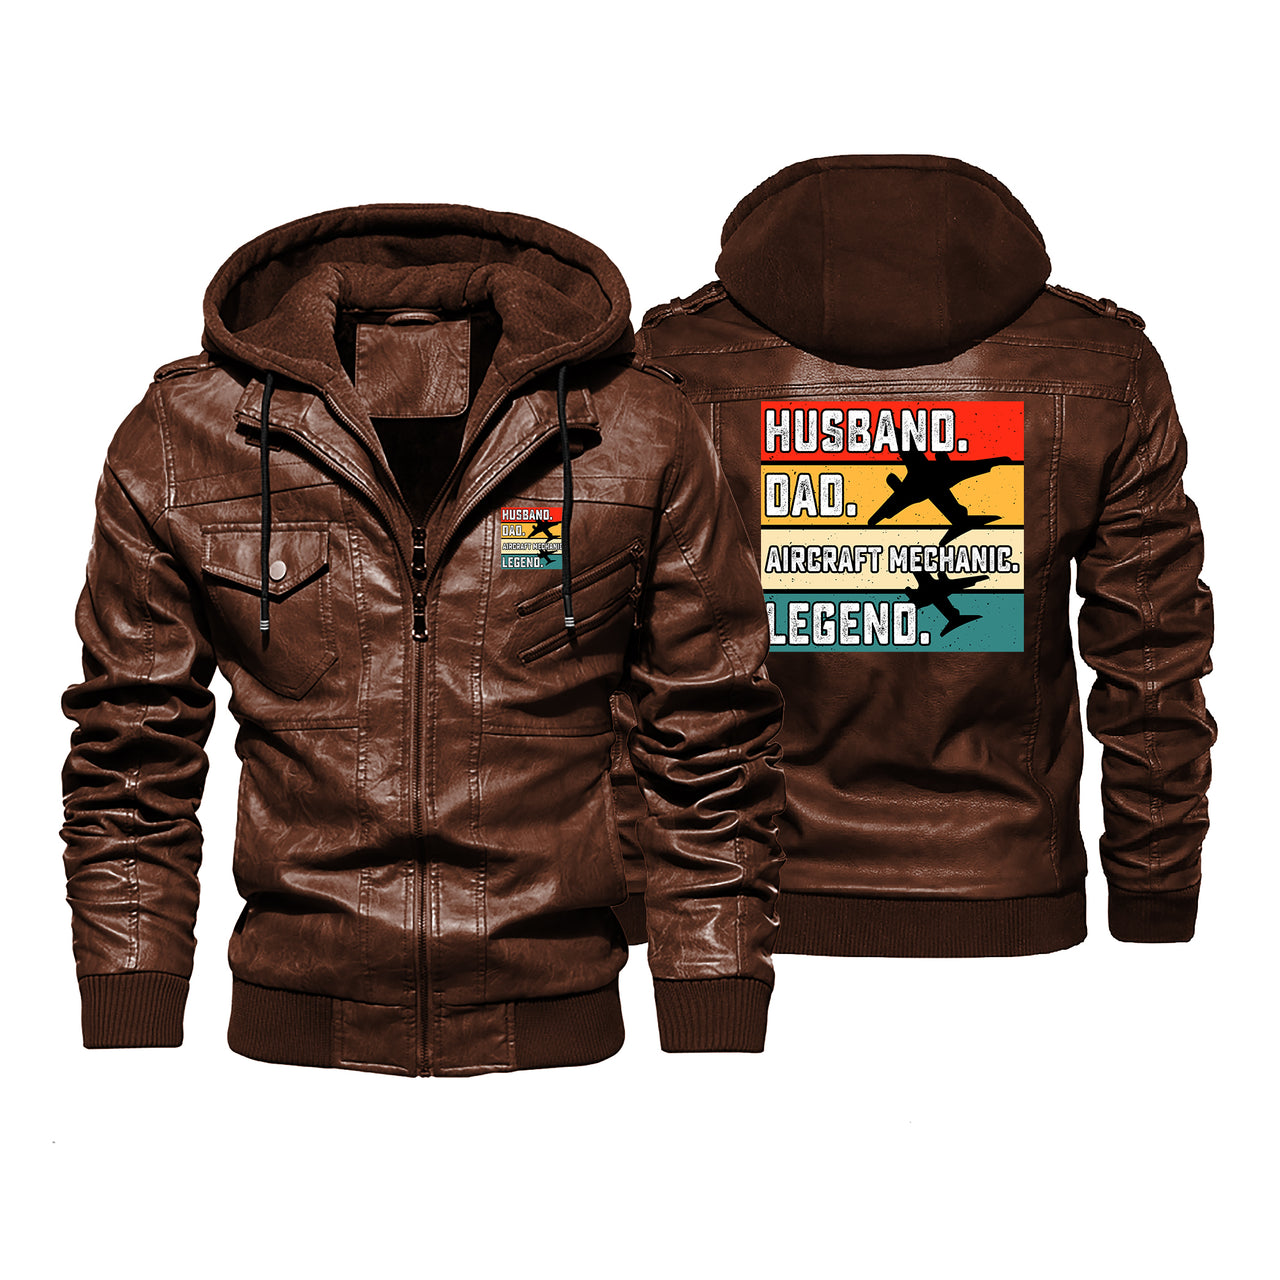 Husband & Dad & Aircraft Mechanic & Legend Designed Hooded Leather Jackets